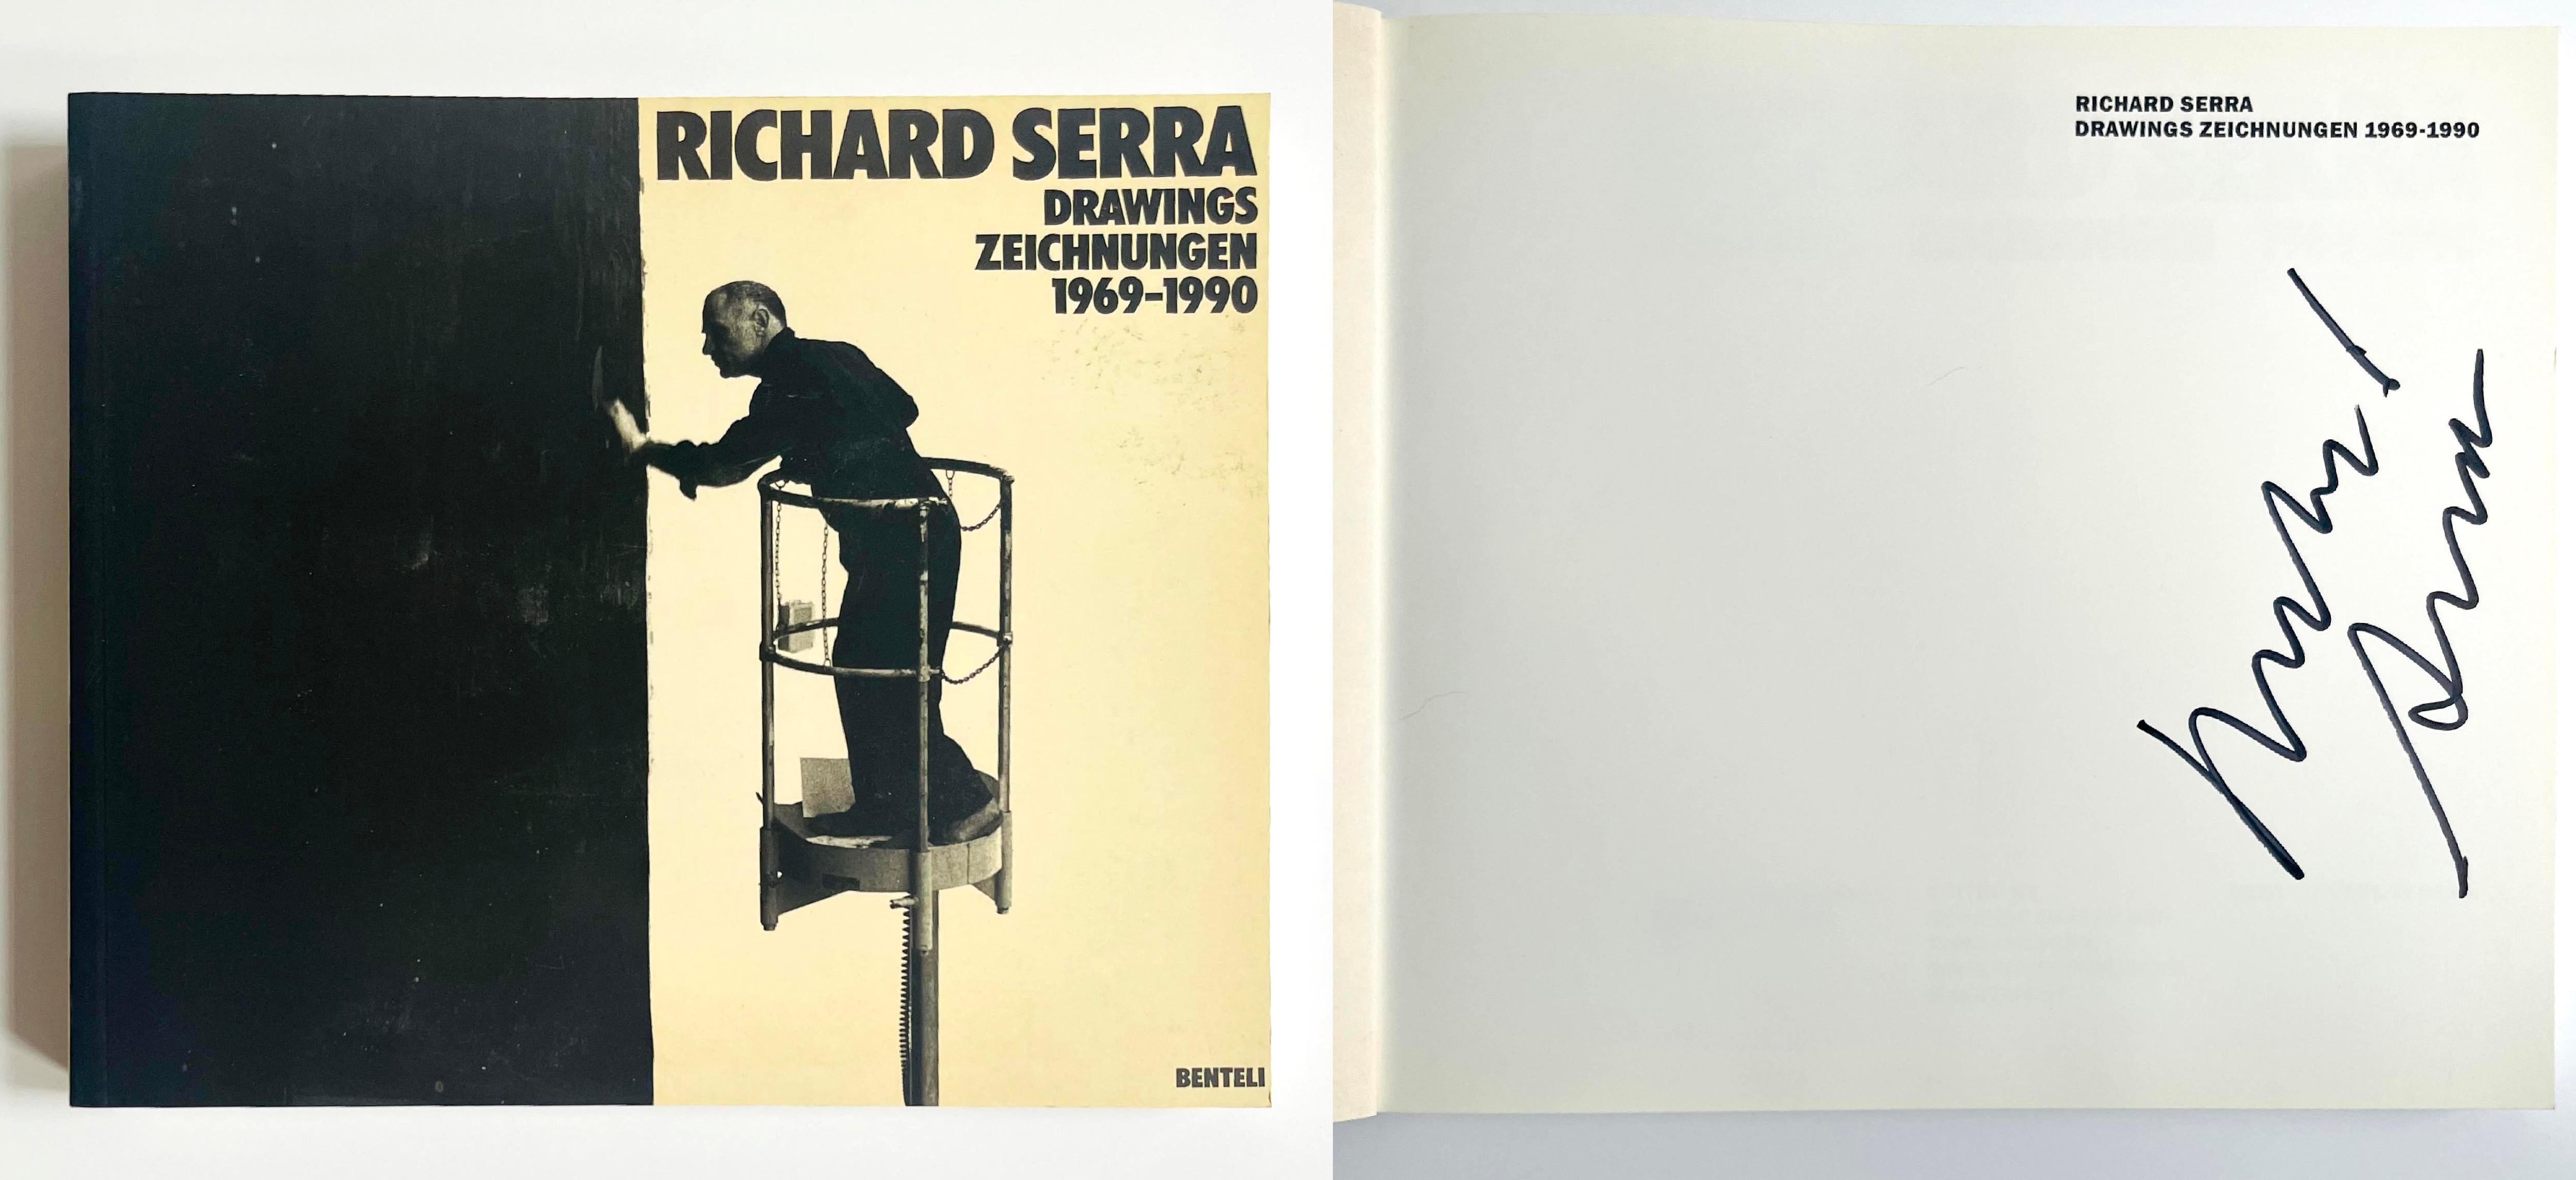 Livre « Richard Serra Drawings Zeichnungen 1969-1990 » signé à la main par Richard Serra